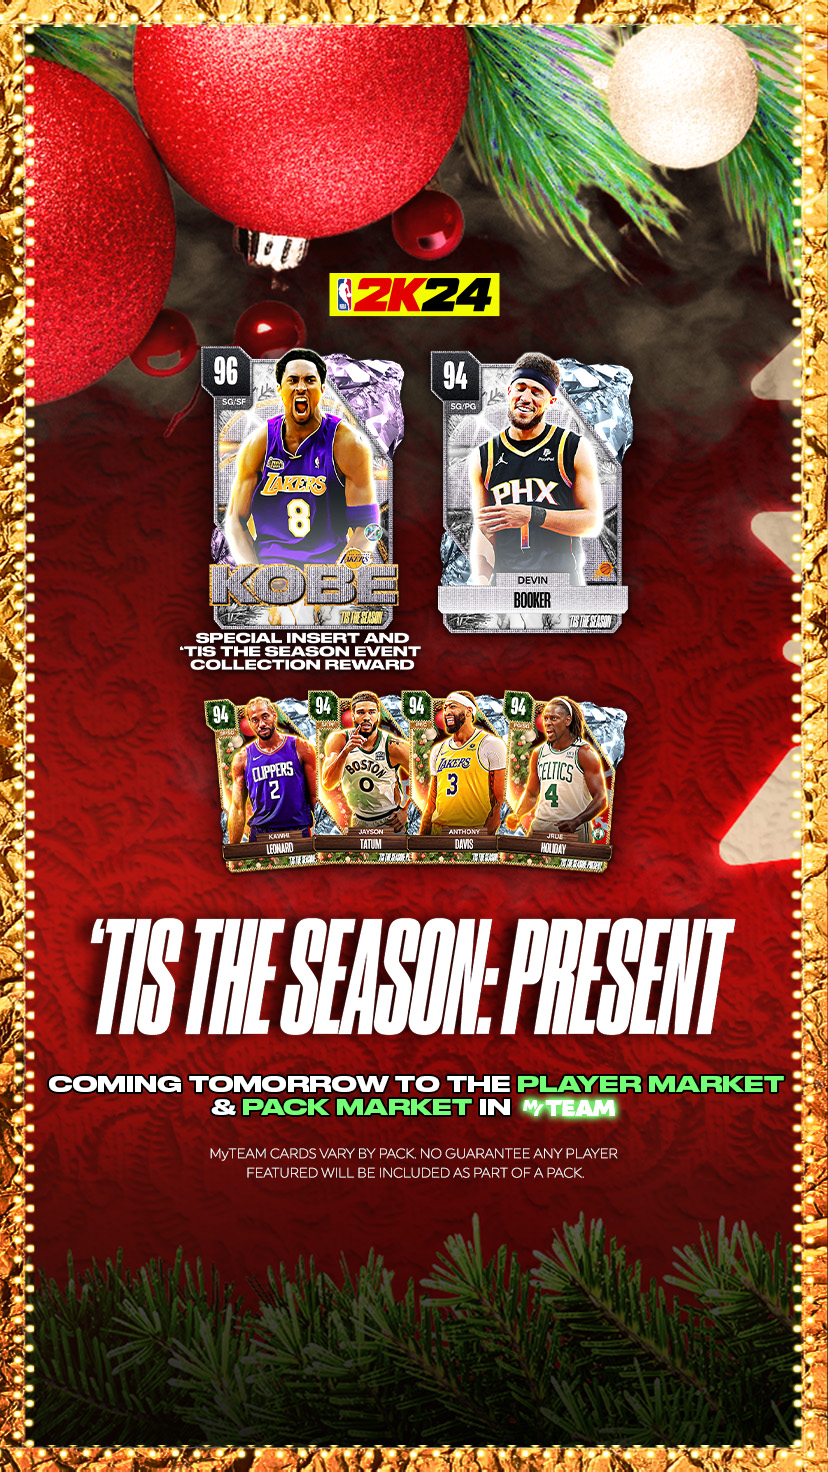 NBA 2K24 Season 3 Features Allen Iverson - Arrives on December 1